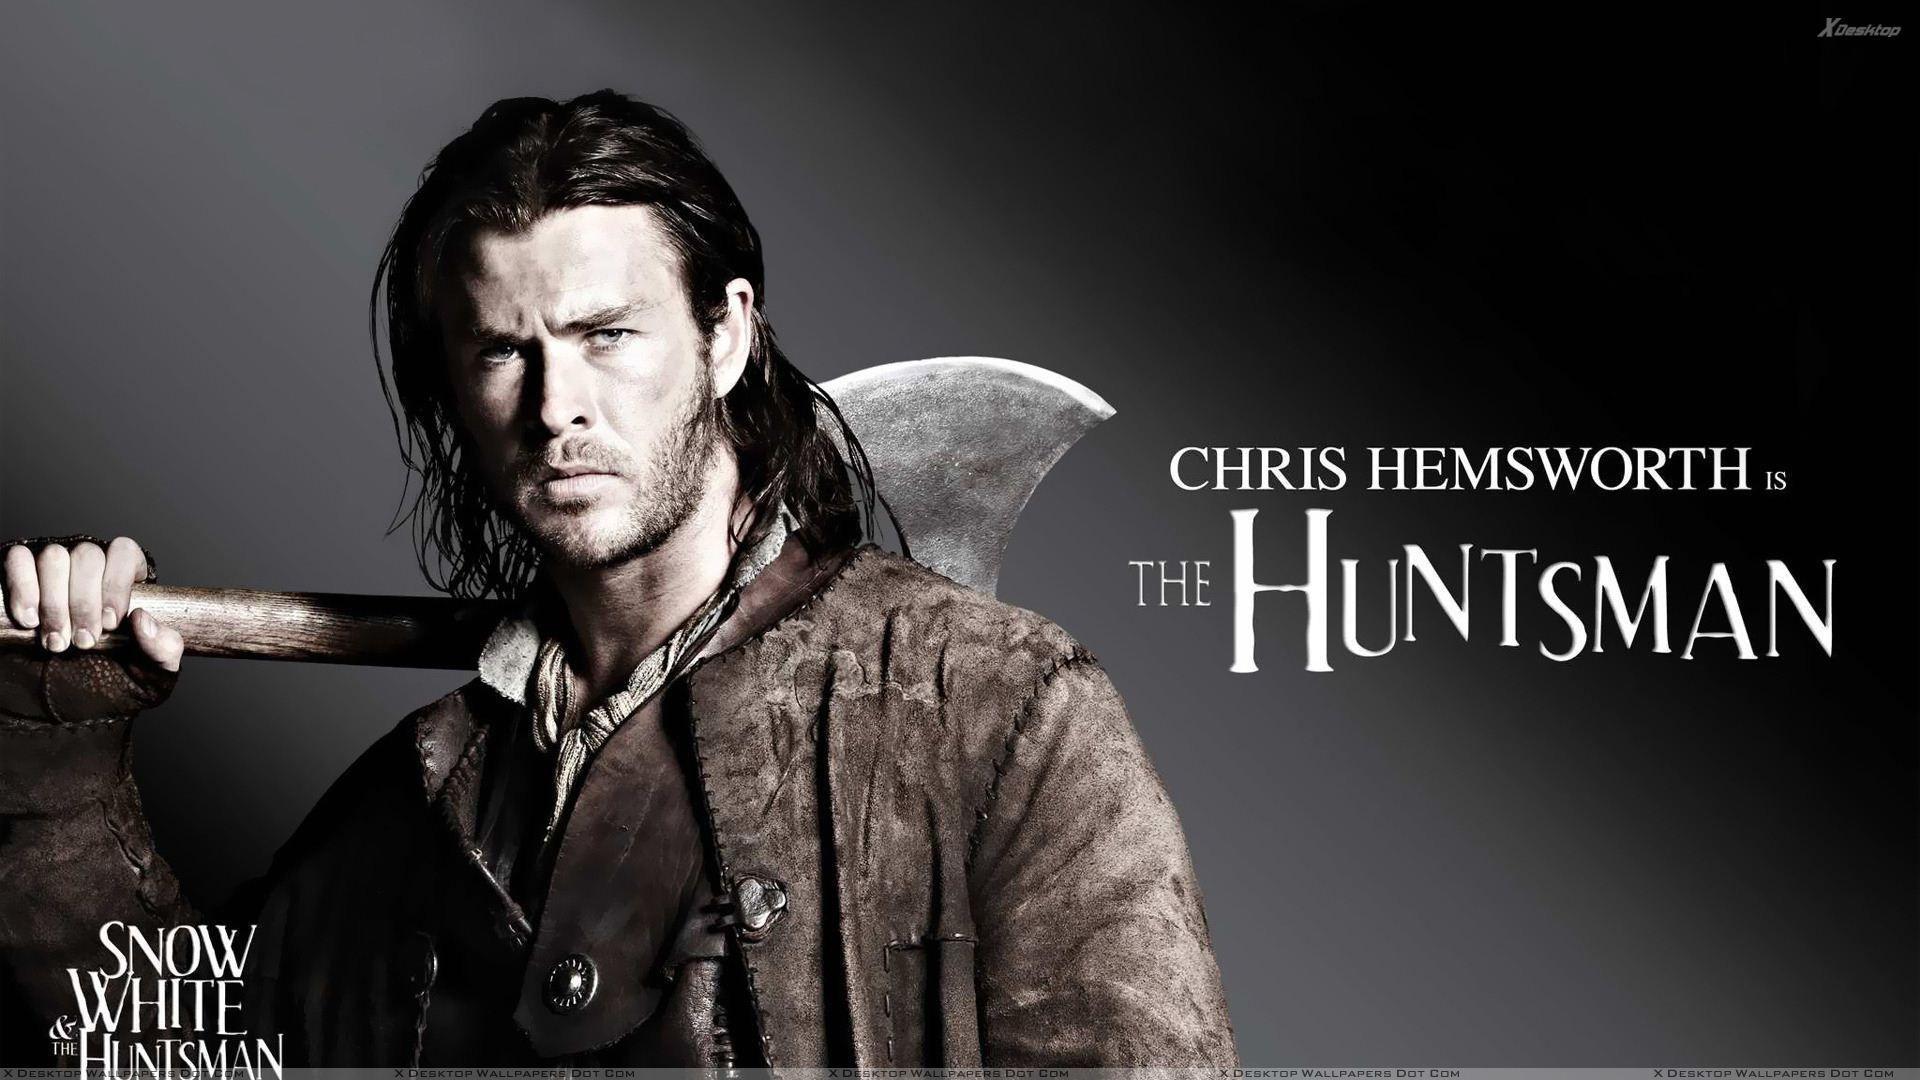 Chris Hemsworth Wallpaper, Photo & Image in HD